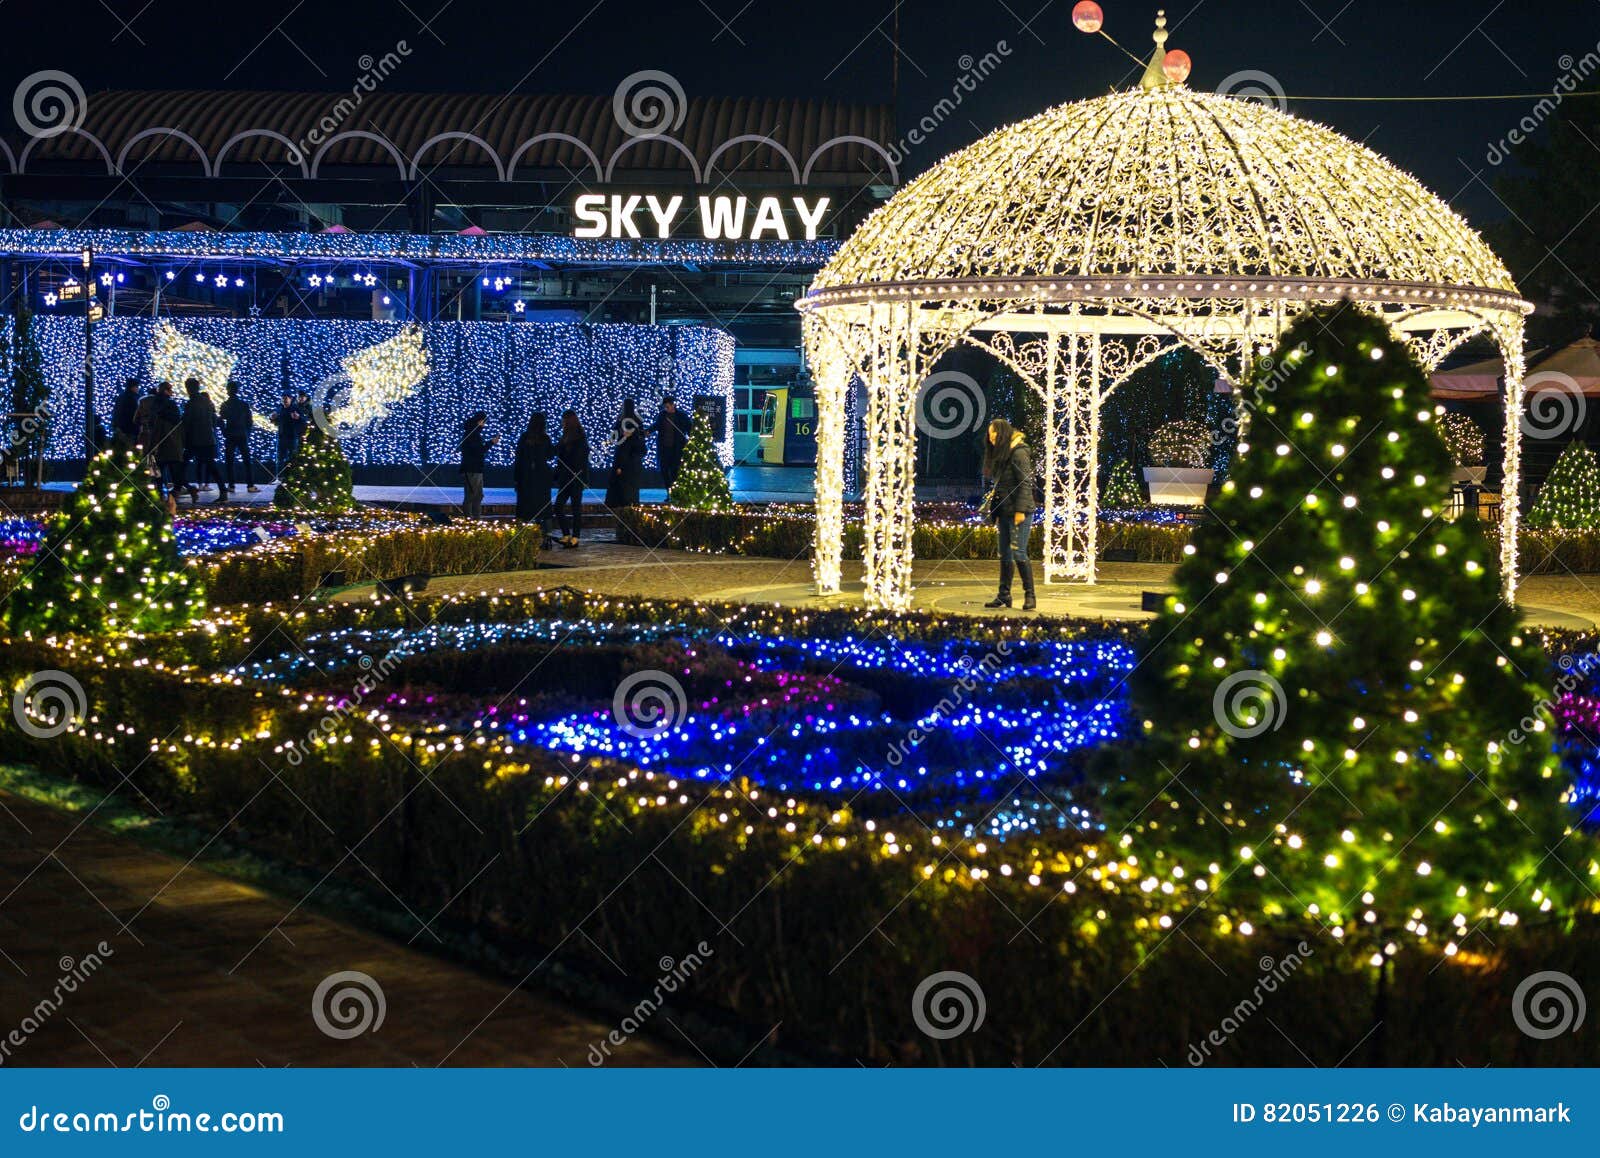 Duryu Park Starry Night Illuminations Night in Daegu South Korea ...